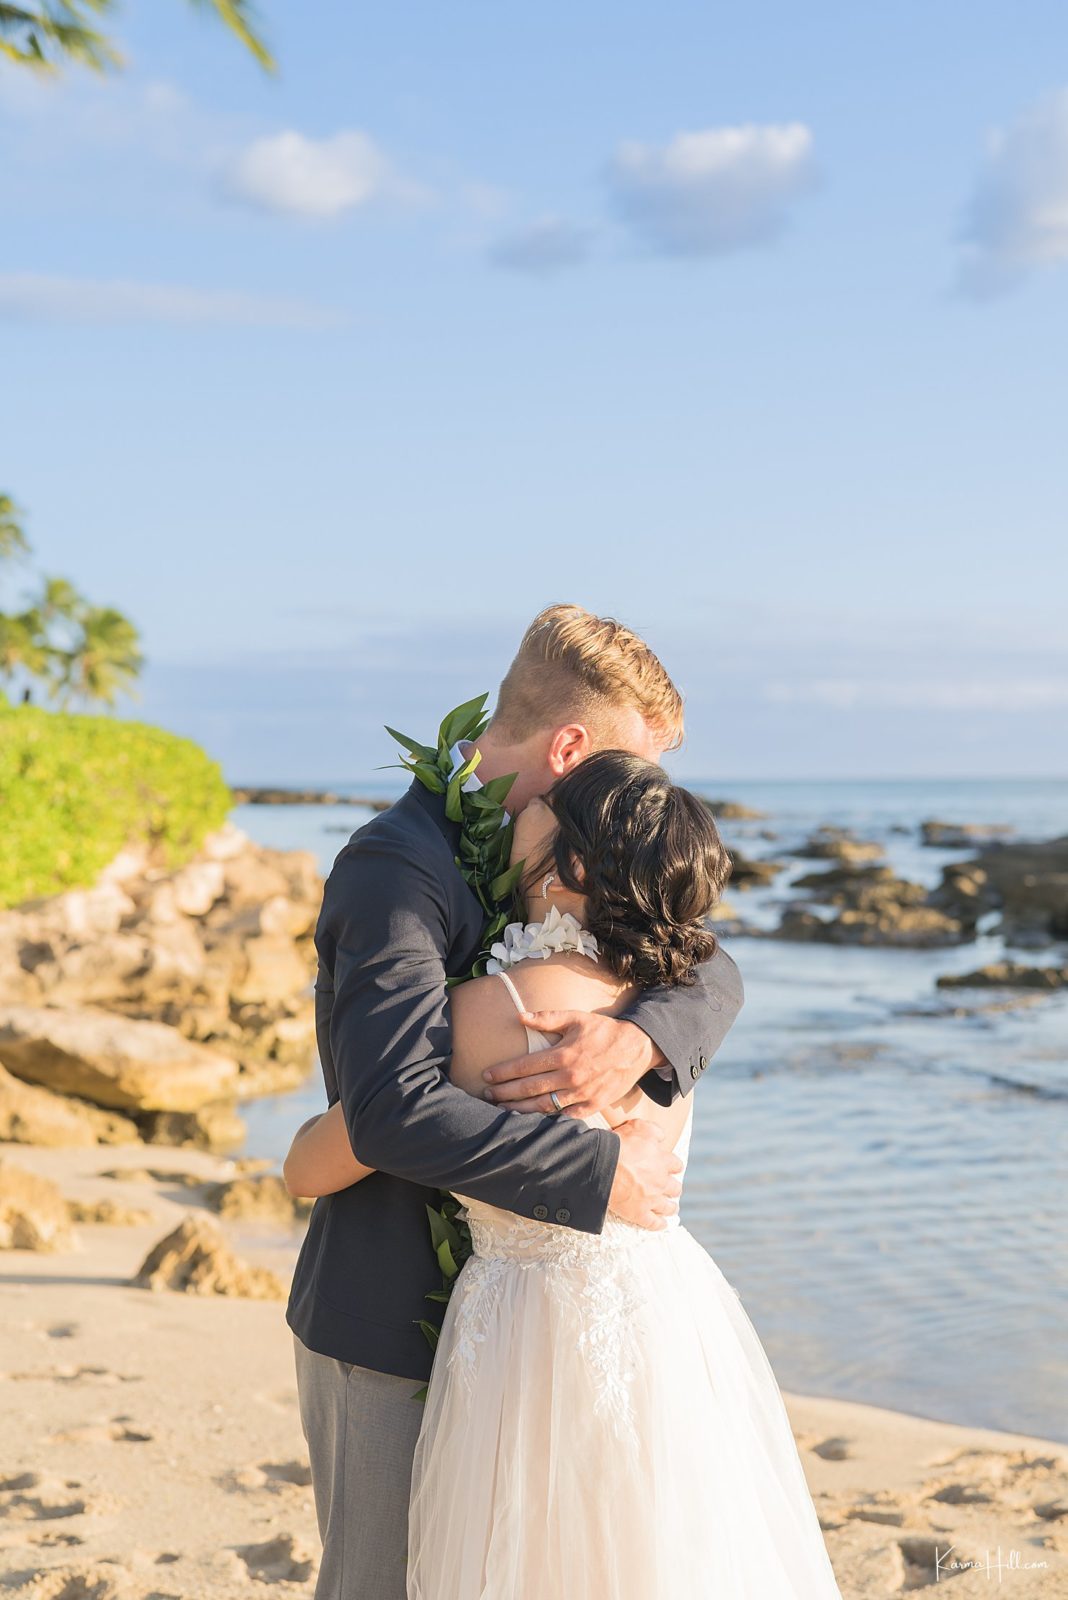 Our Immediate Bond - Kathleen & Jason's Oahu Elopement